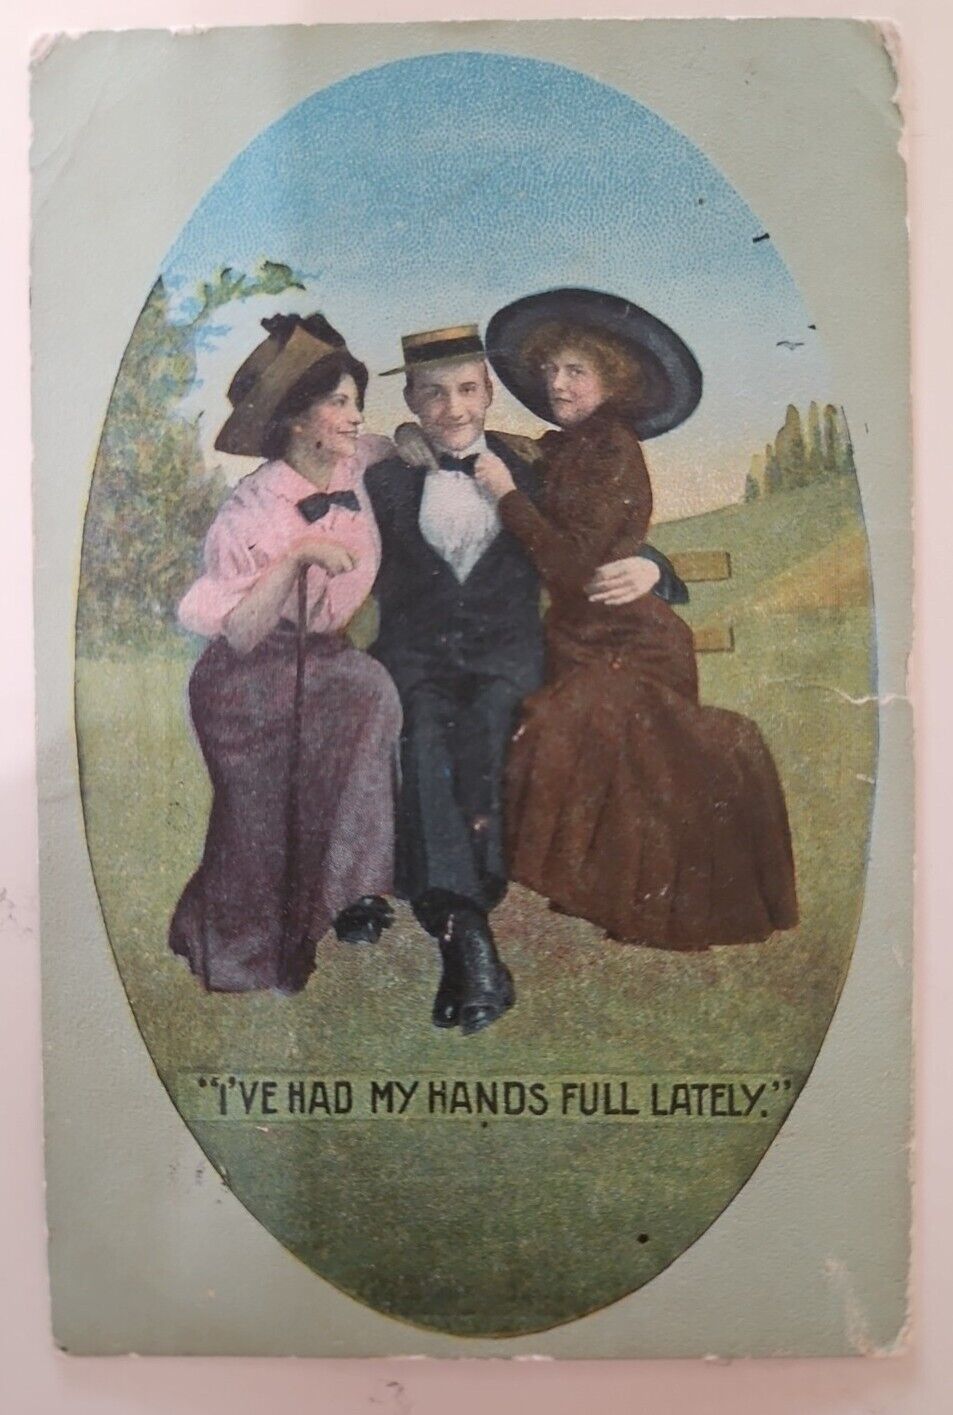 1913 Vintage Post Card. Fck Boy, Rake, Party Boy, Play Boy, Thrupple, Threesome 